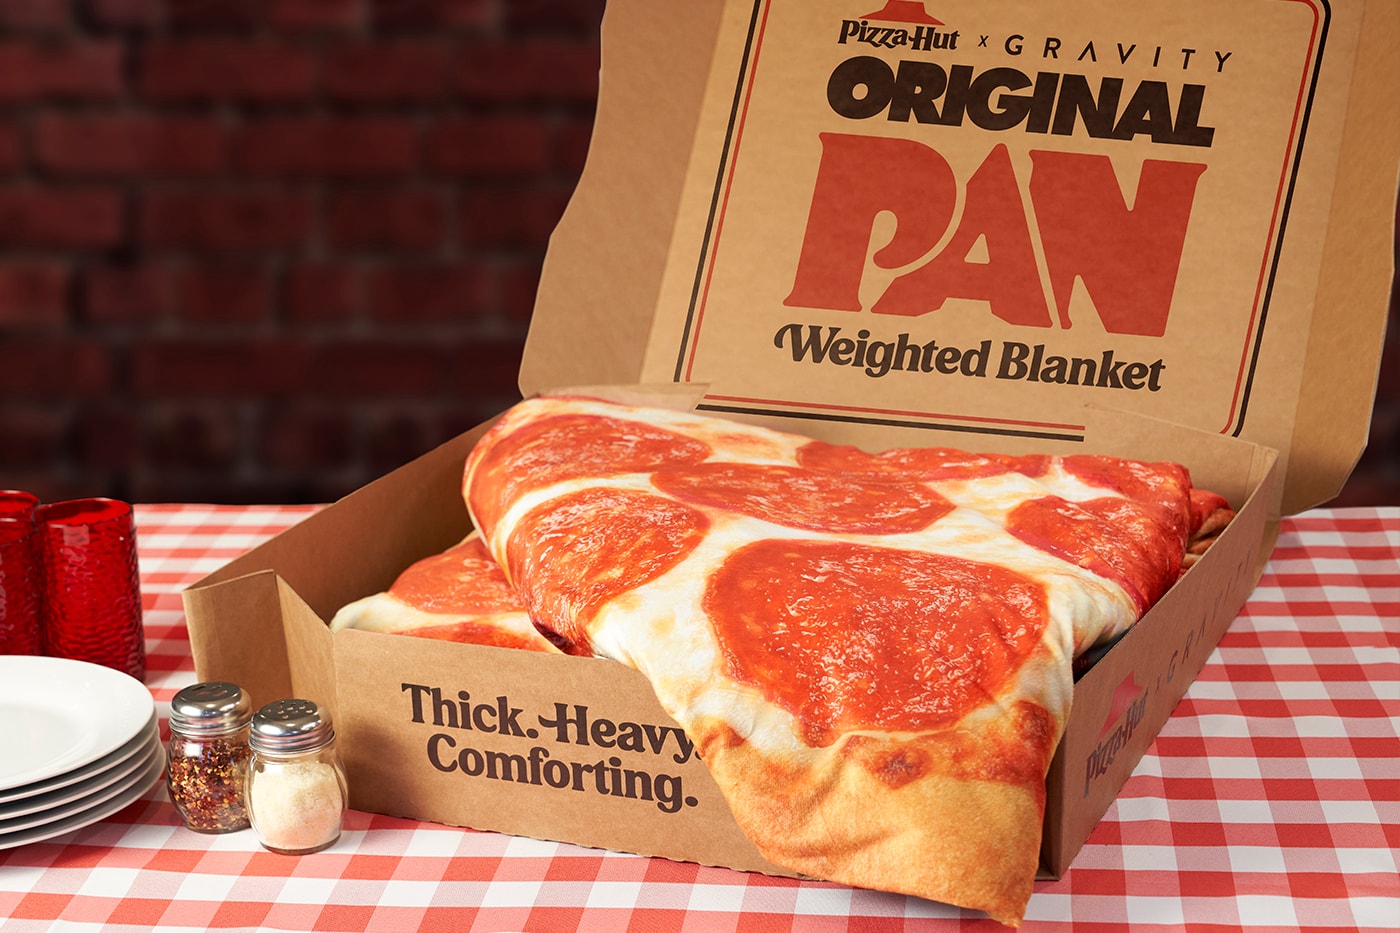 Pizza Hut Drops 15-Pound Original Pan Gravity Blanket  pizza hut foot anxiety sleep warmth Christmas cheese pepperoni 